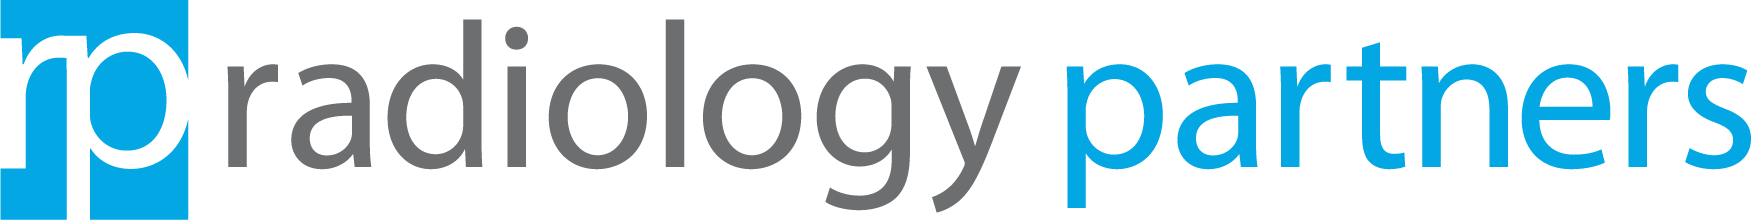 Radiology Partners logo